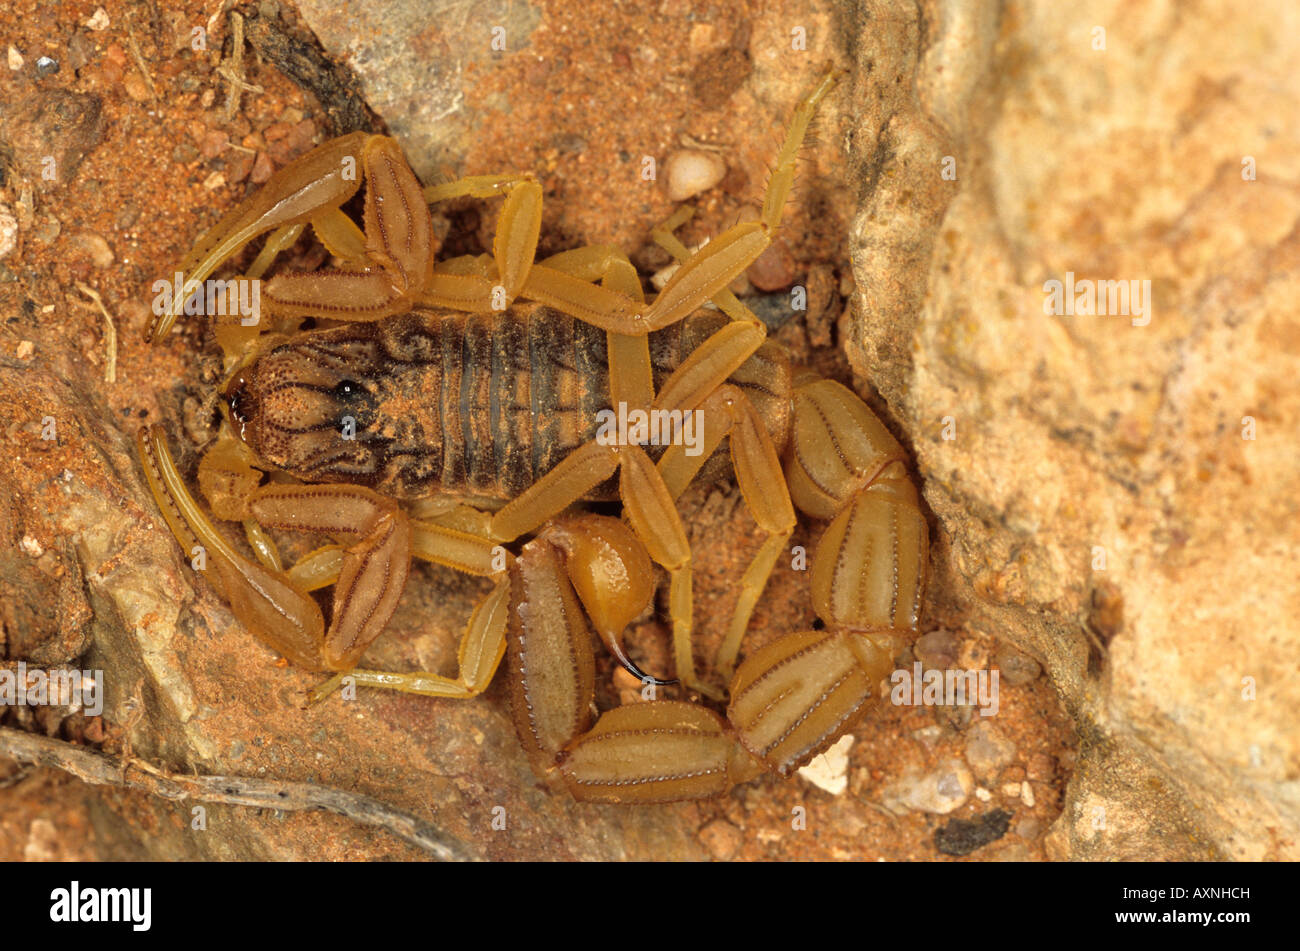 Scorpion Buthus occitanus Morocco Stock Photo